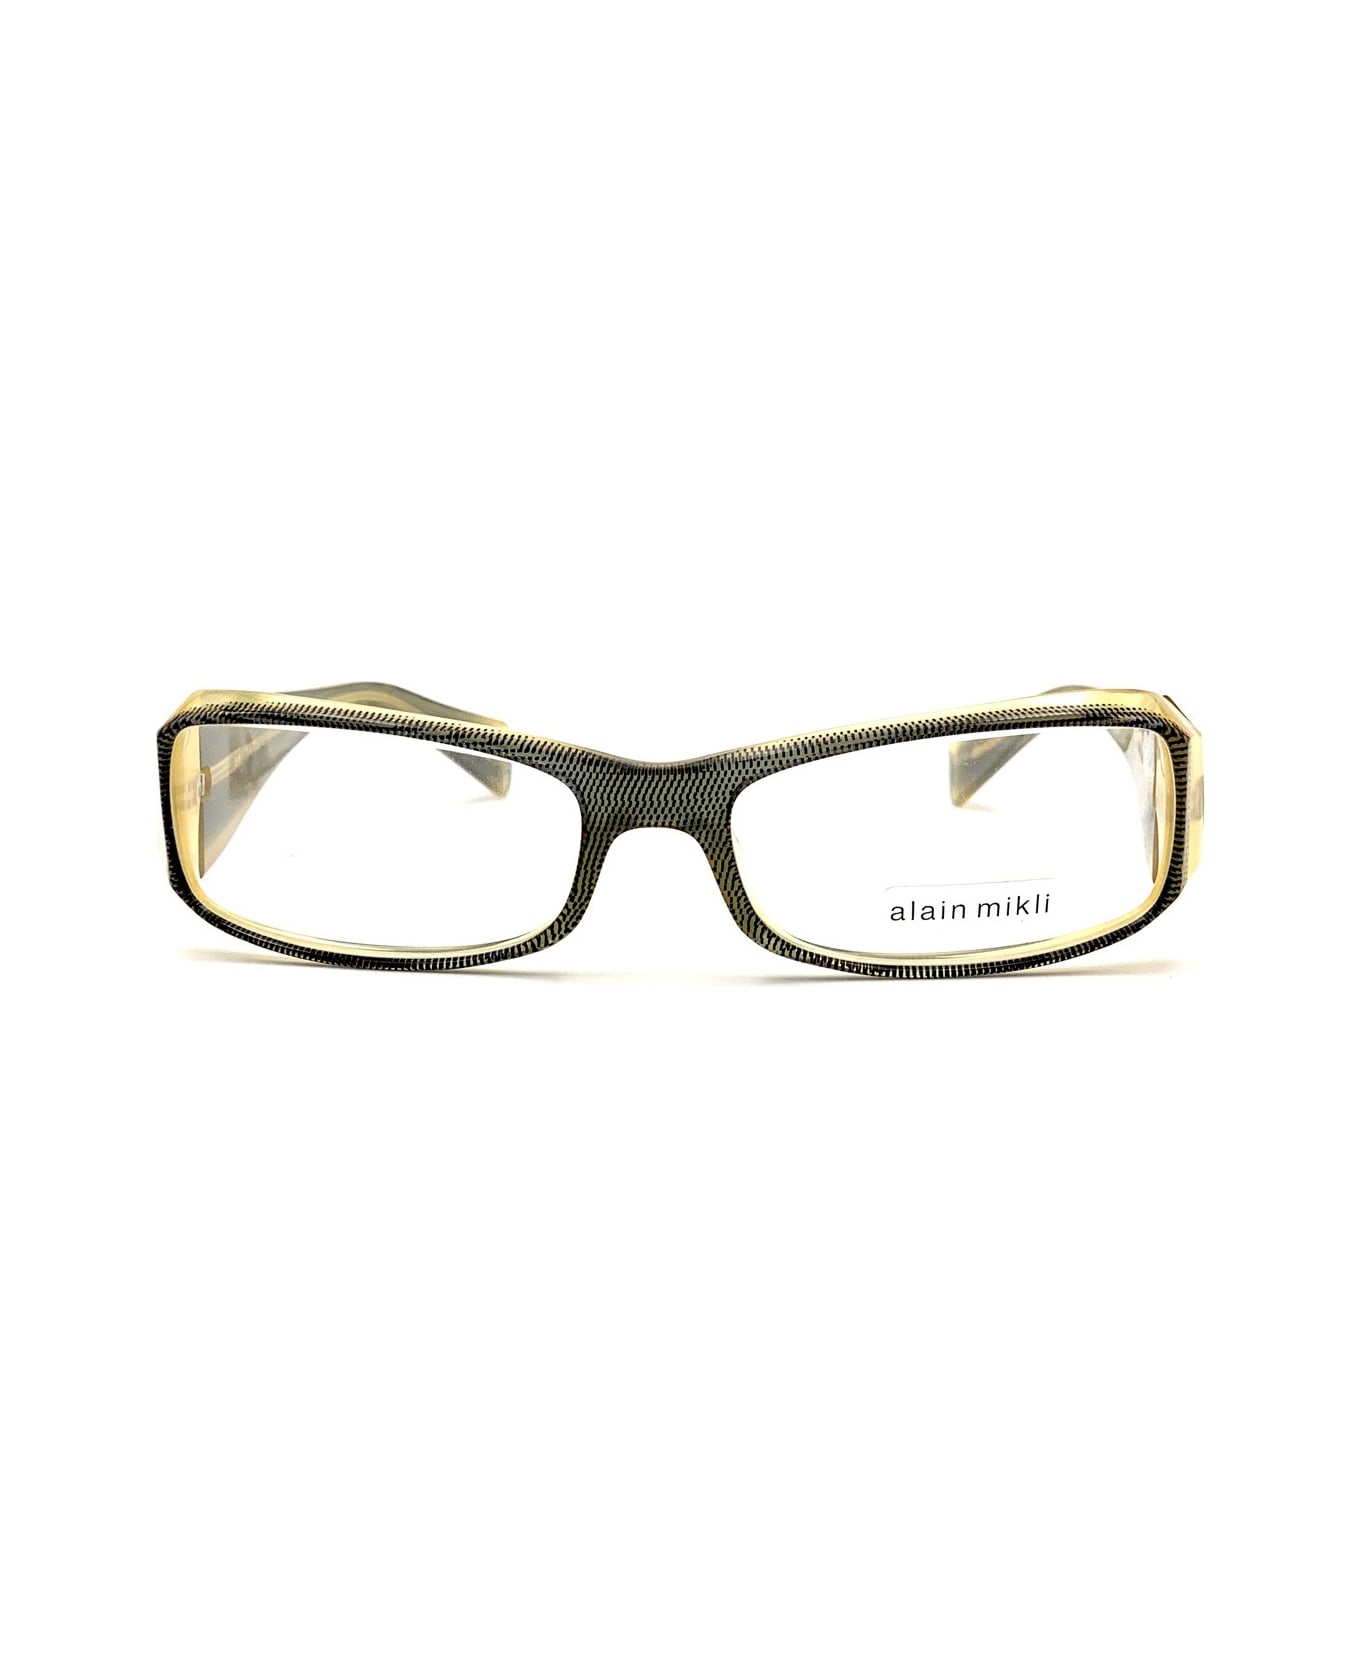 Alain Mikli A0511 Pact Glasses - Giallo アイウェア